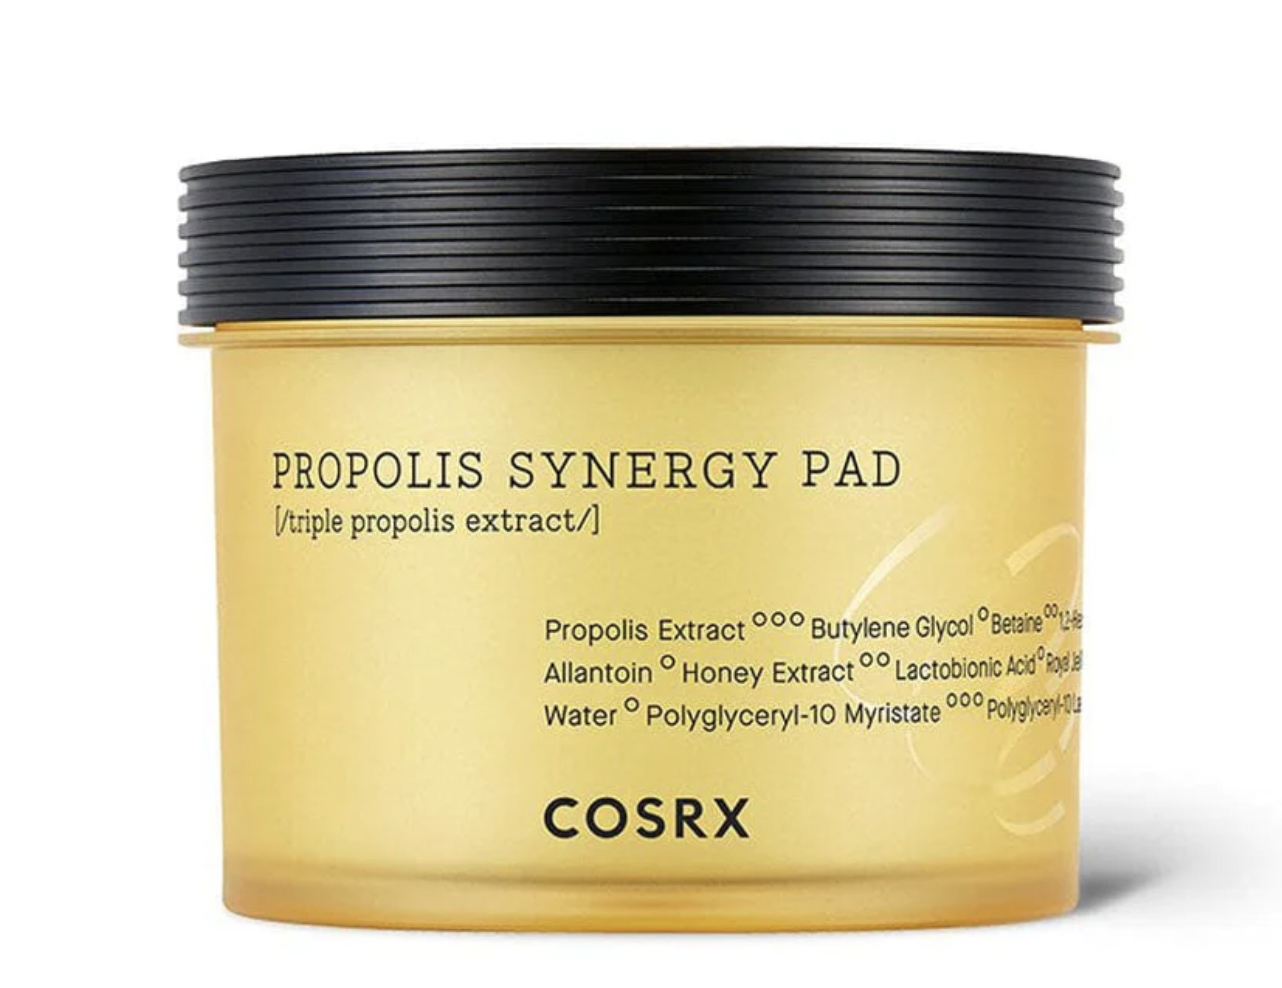 Cosrx Propolis Synergy Pad